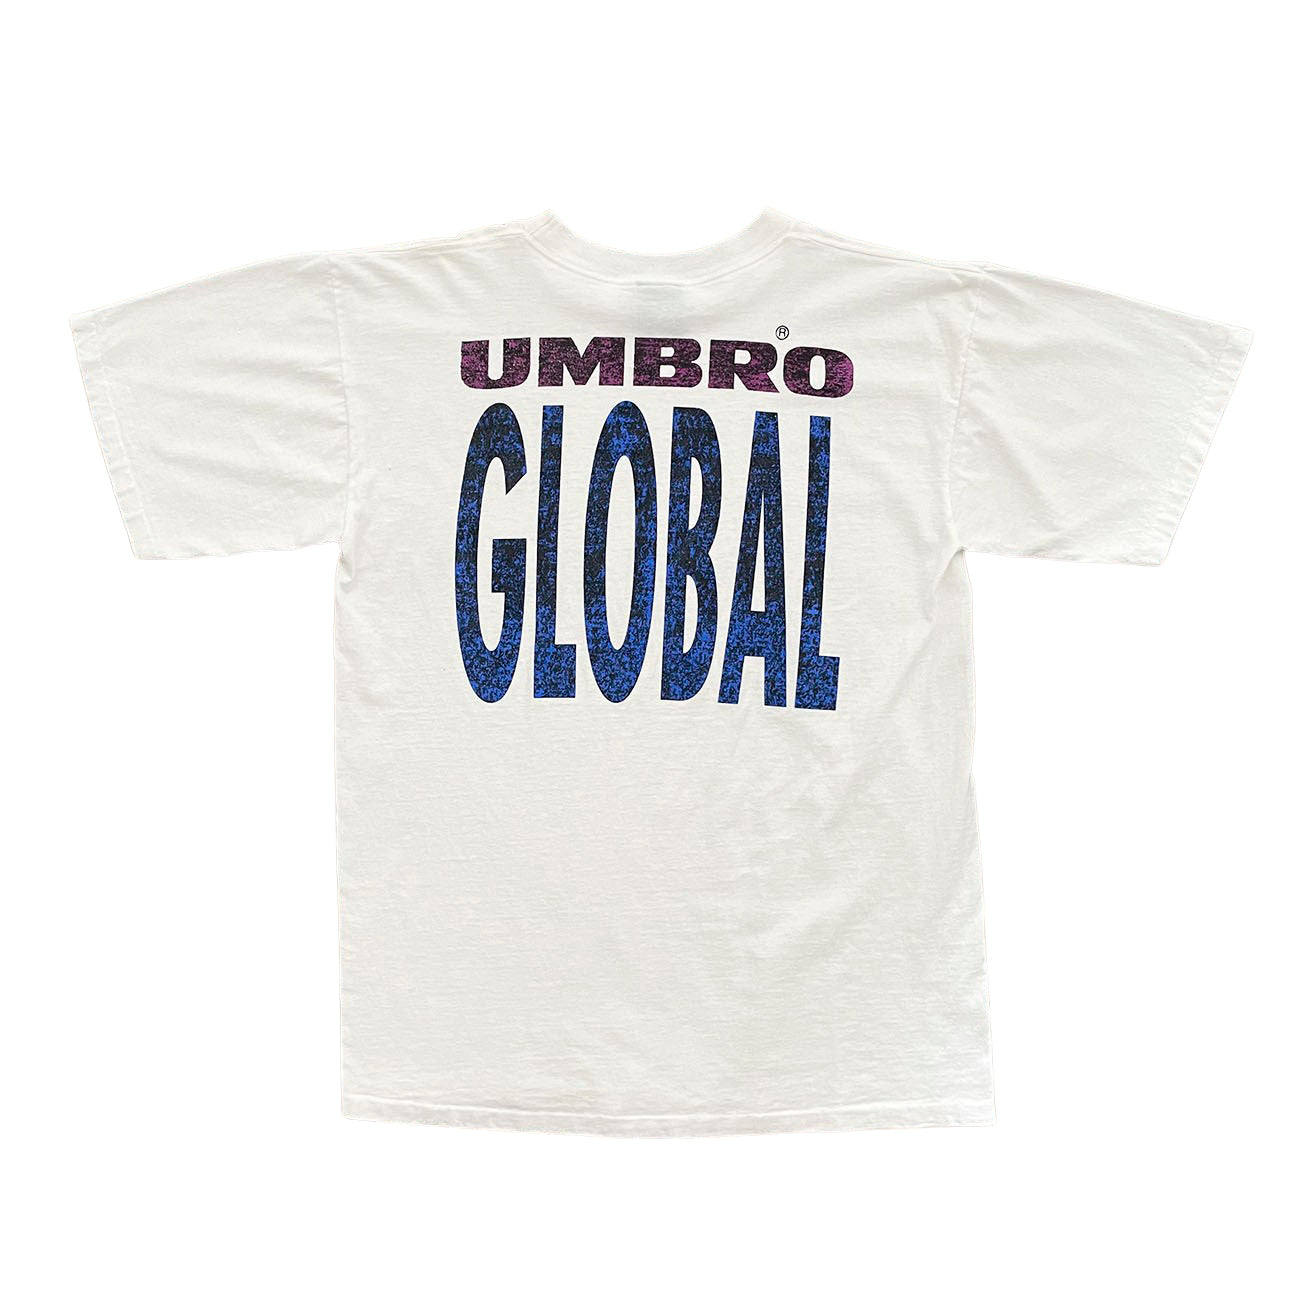 Umbro Global Graphic T-Shirt - XL